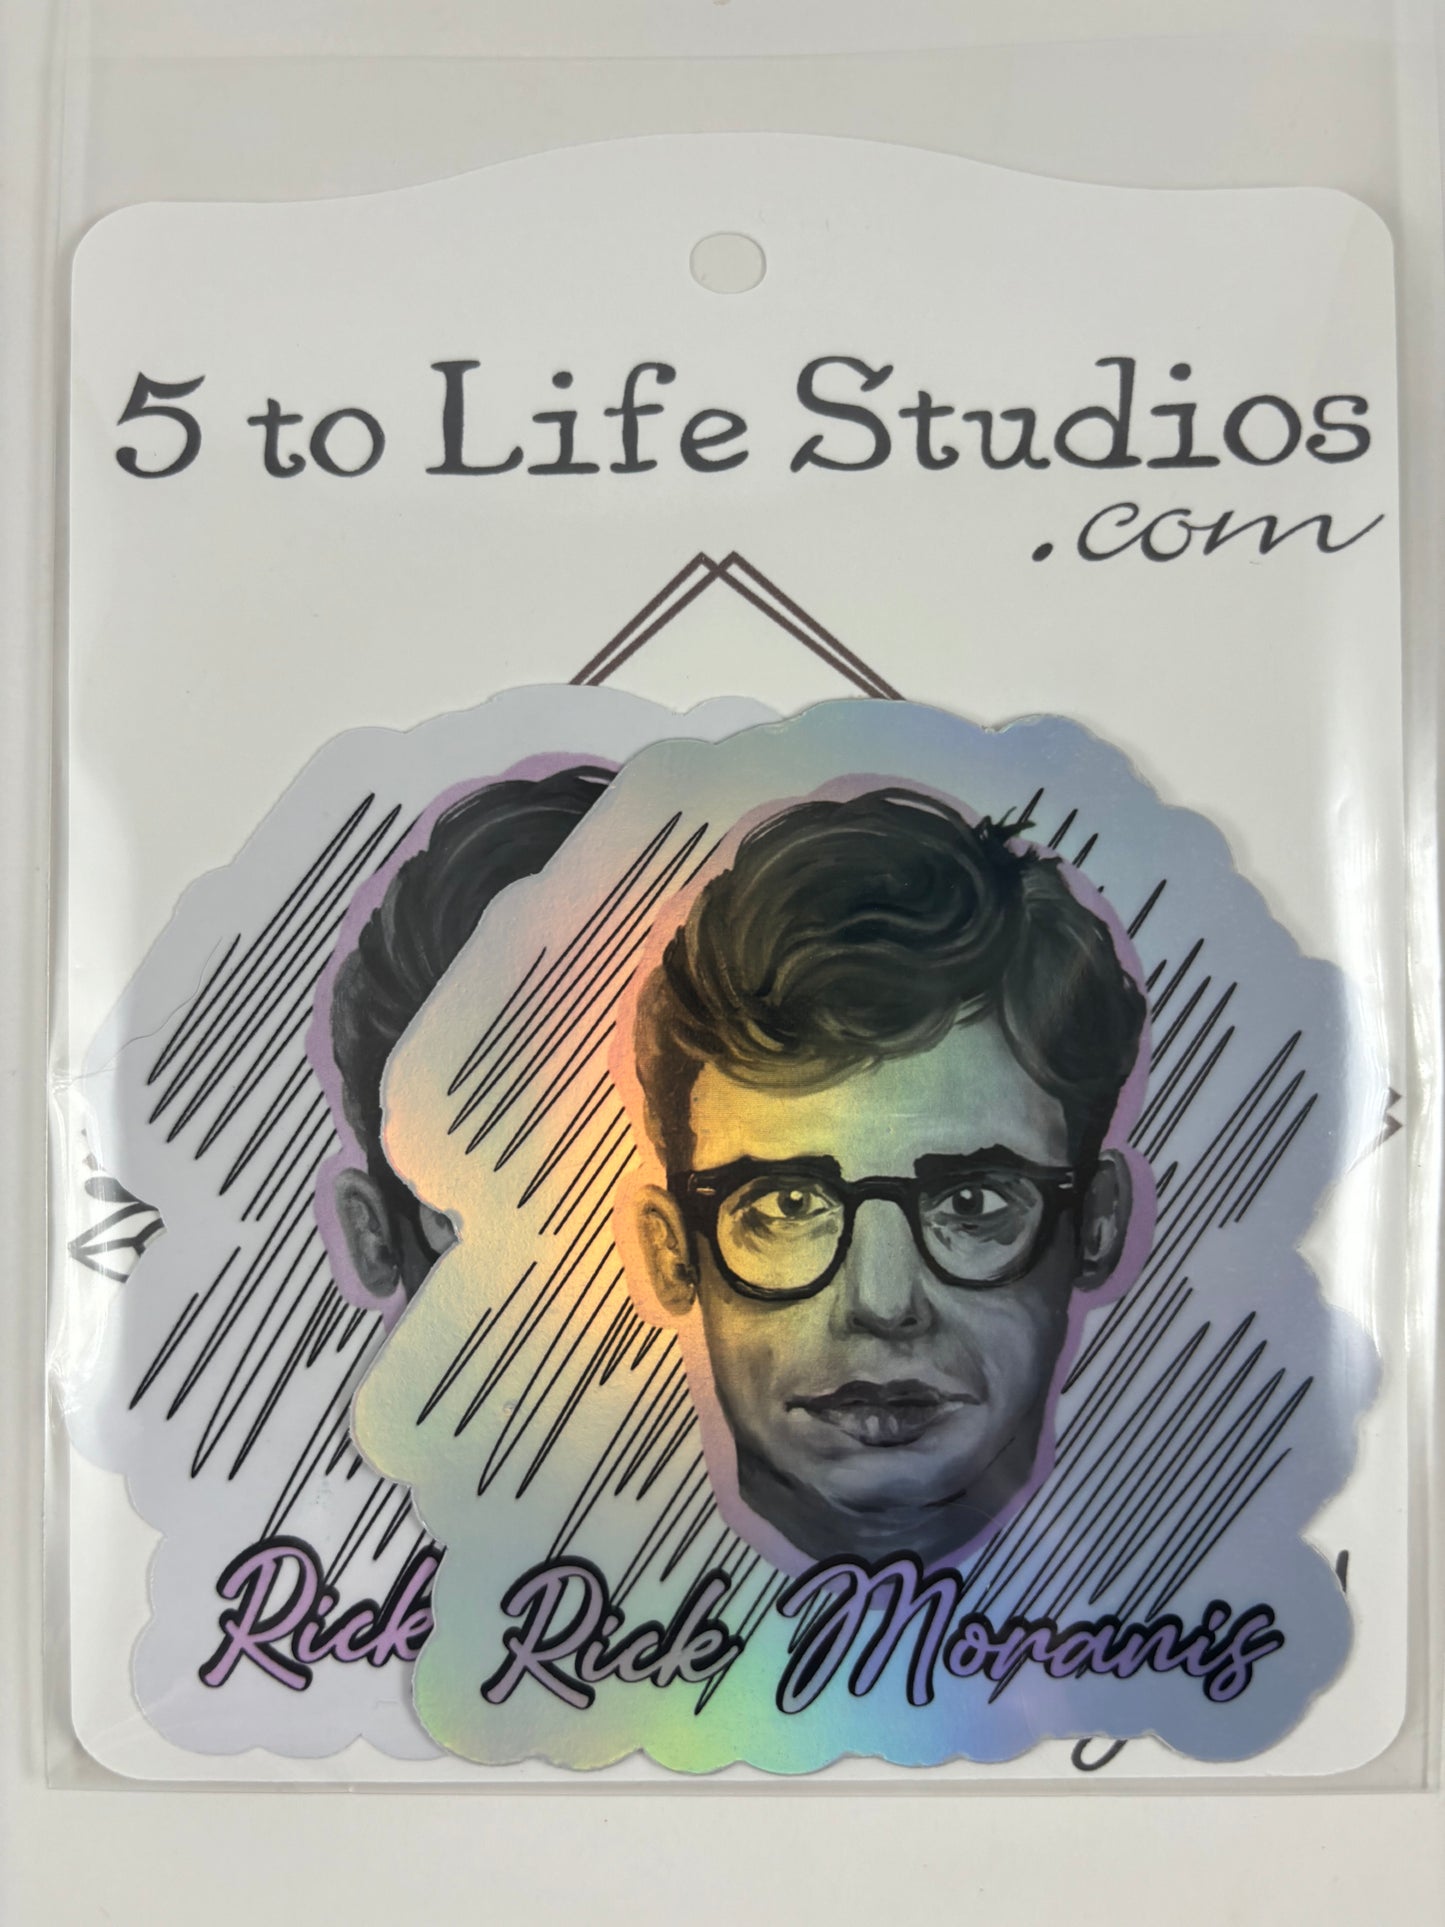 "Rick Moranis" Stickers (2pack)